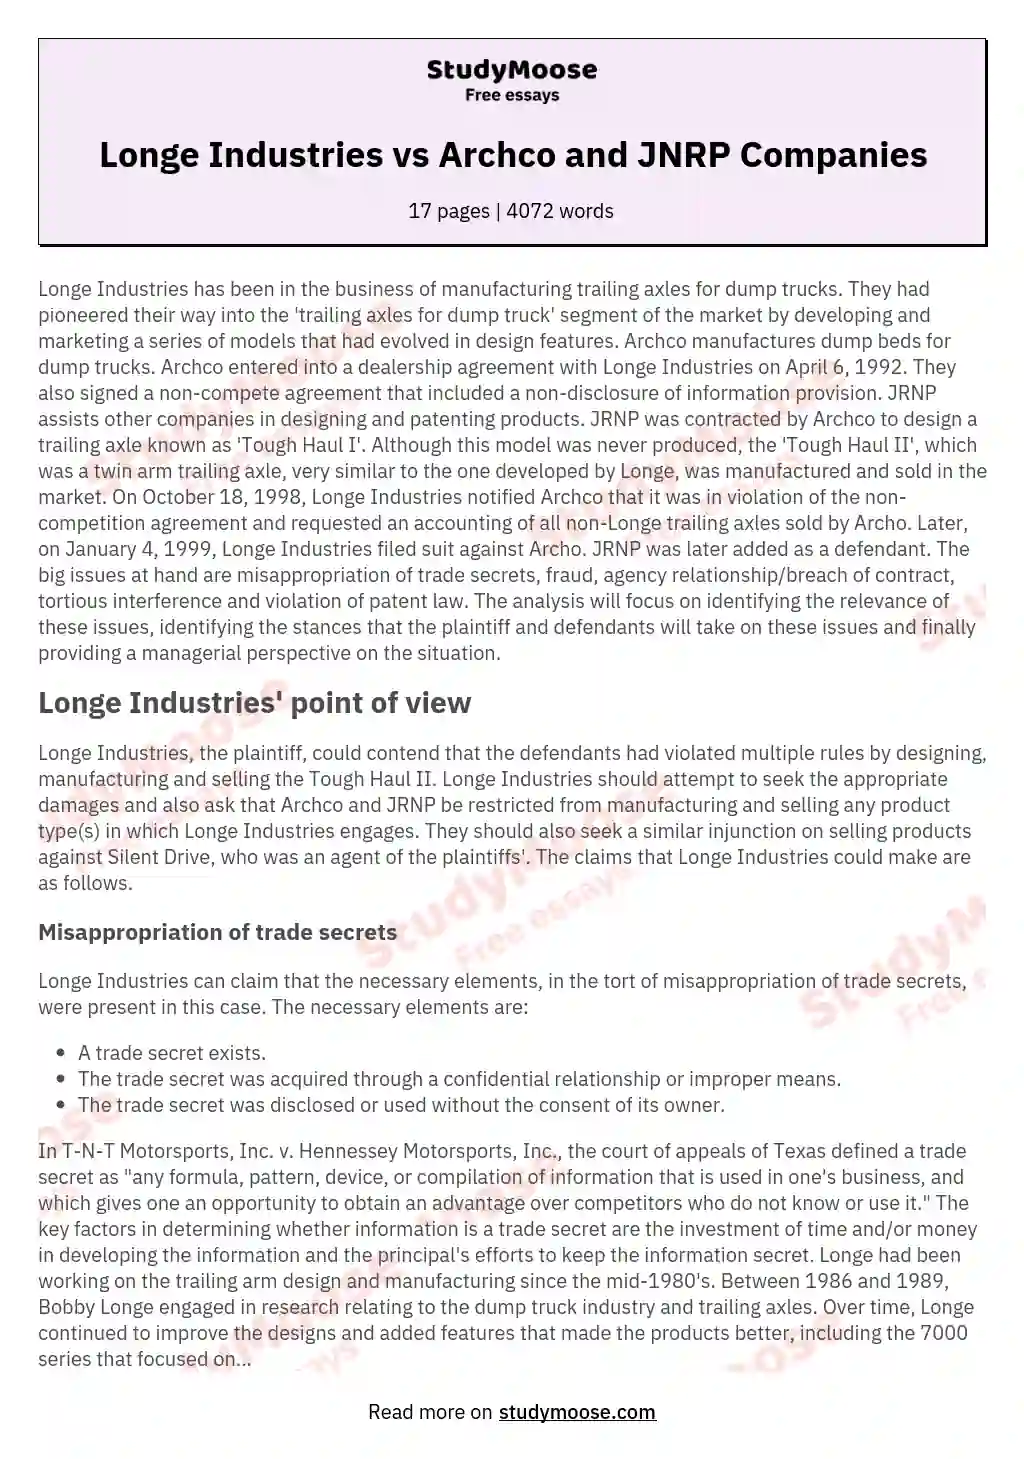 Longe Industries vs Archco and JNRP Companies essay